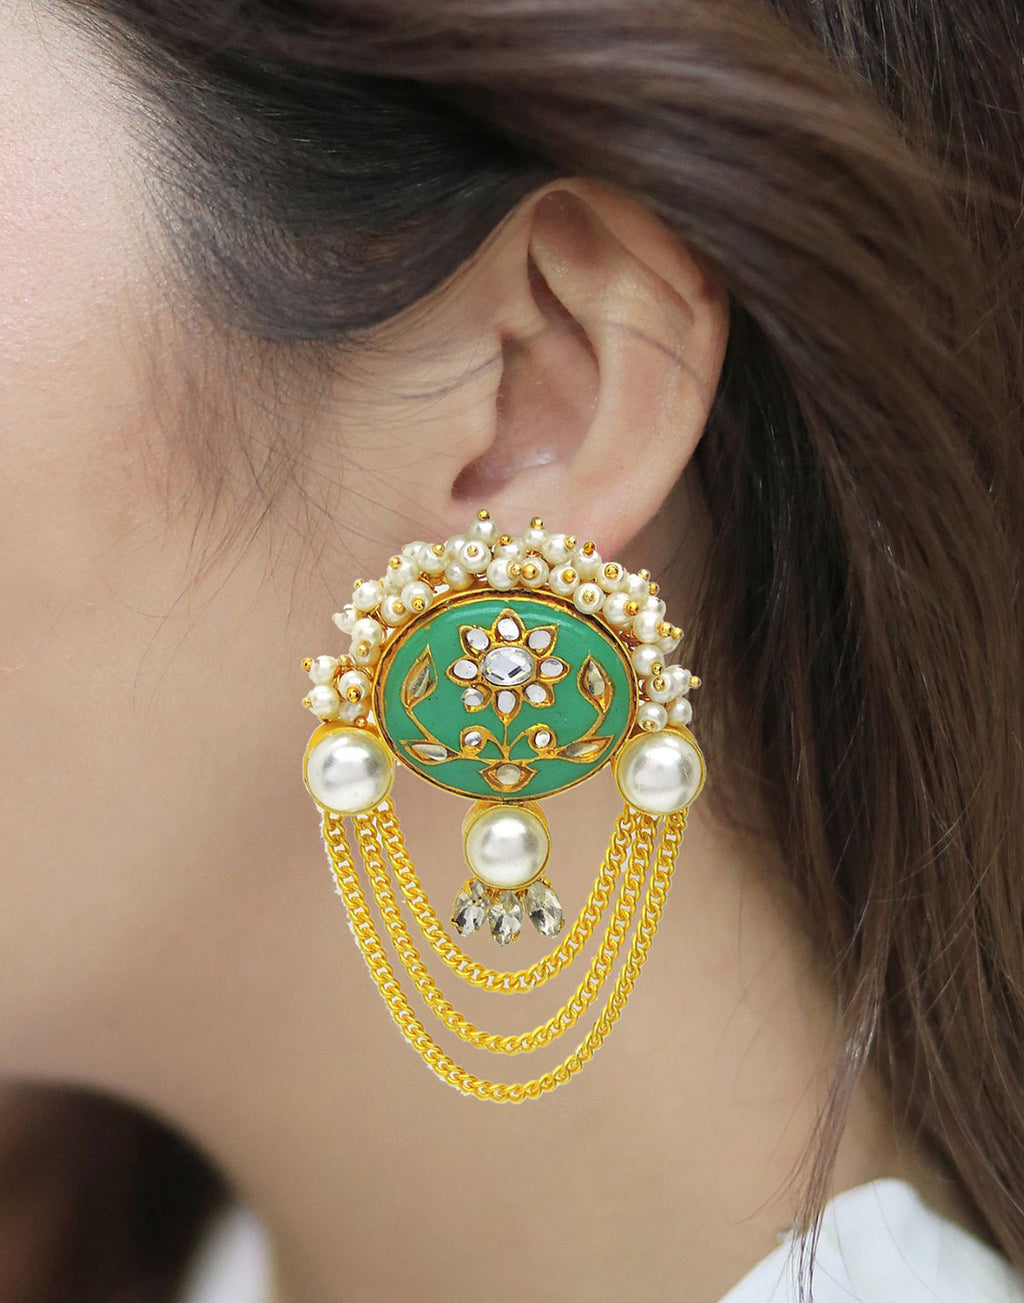 Kundan Chain Earrings - Statement Earrings - Gold-Plated & Hypoallergenic Jewellery - Made in India - Dubai Jewellery - Dori